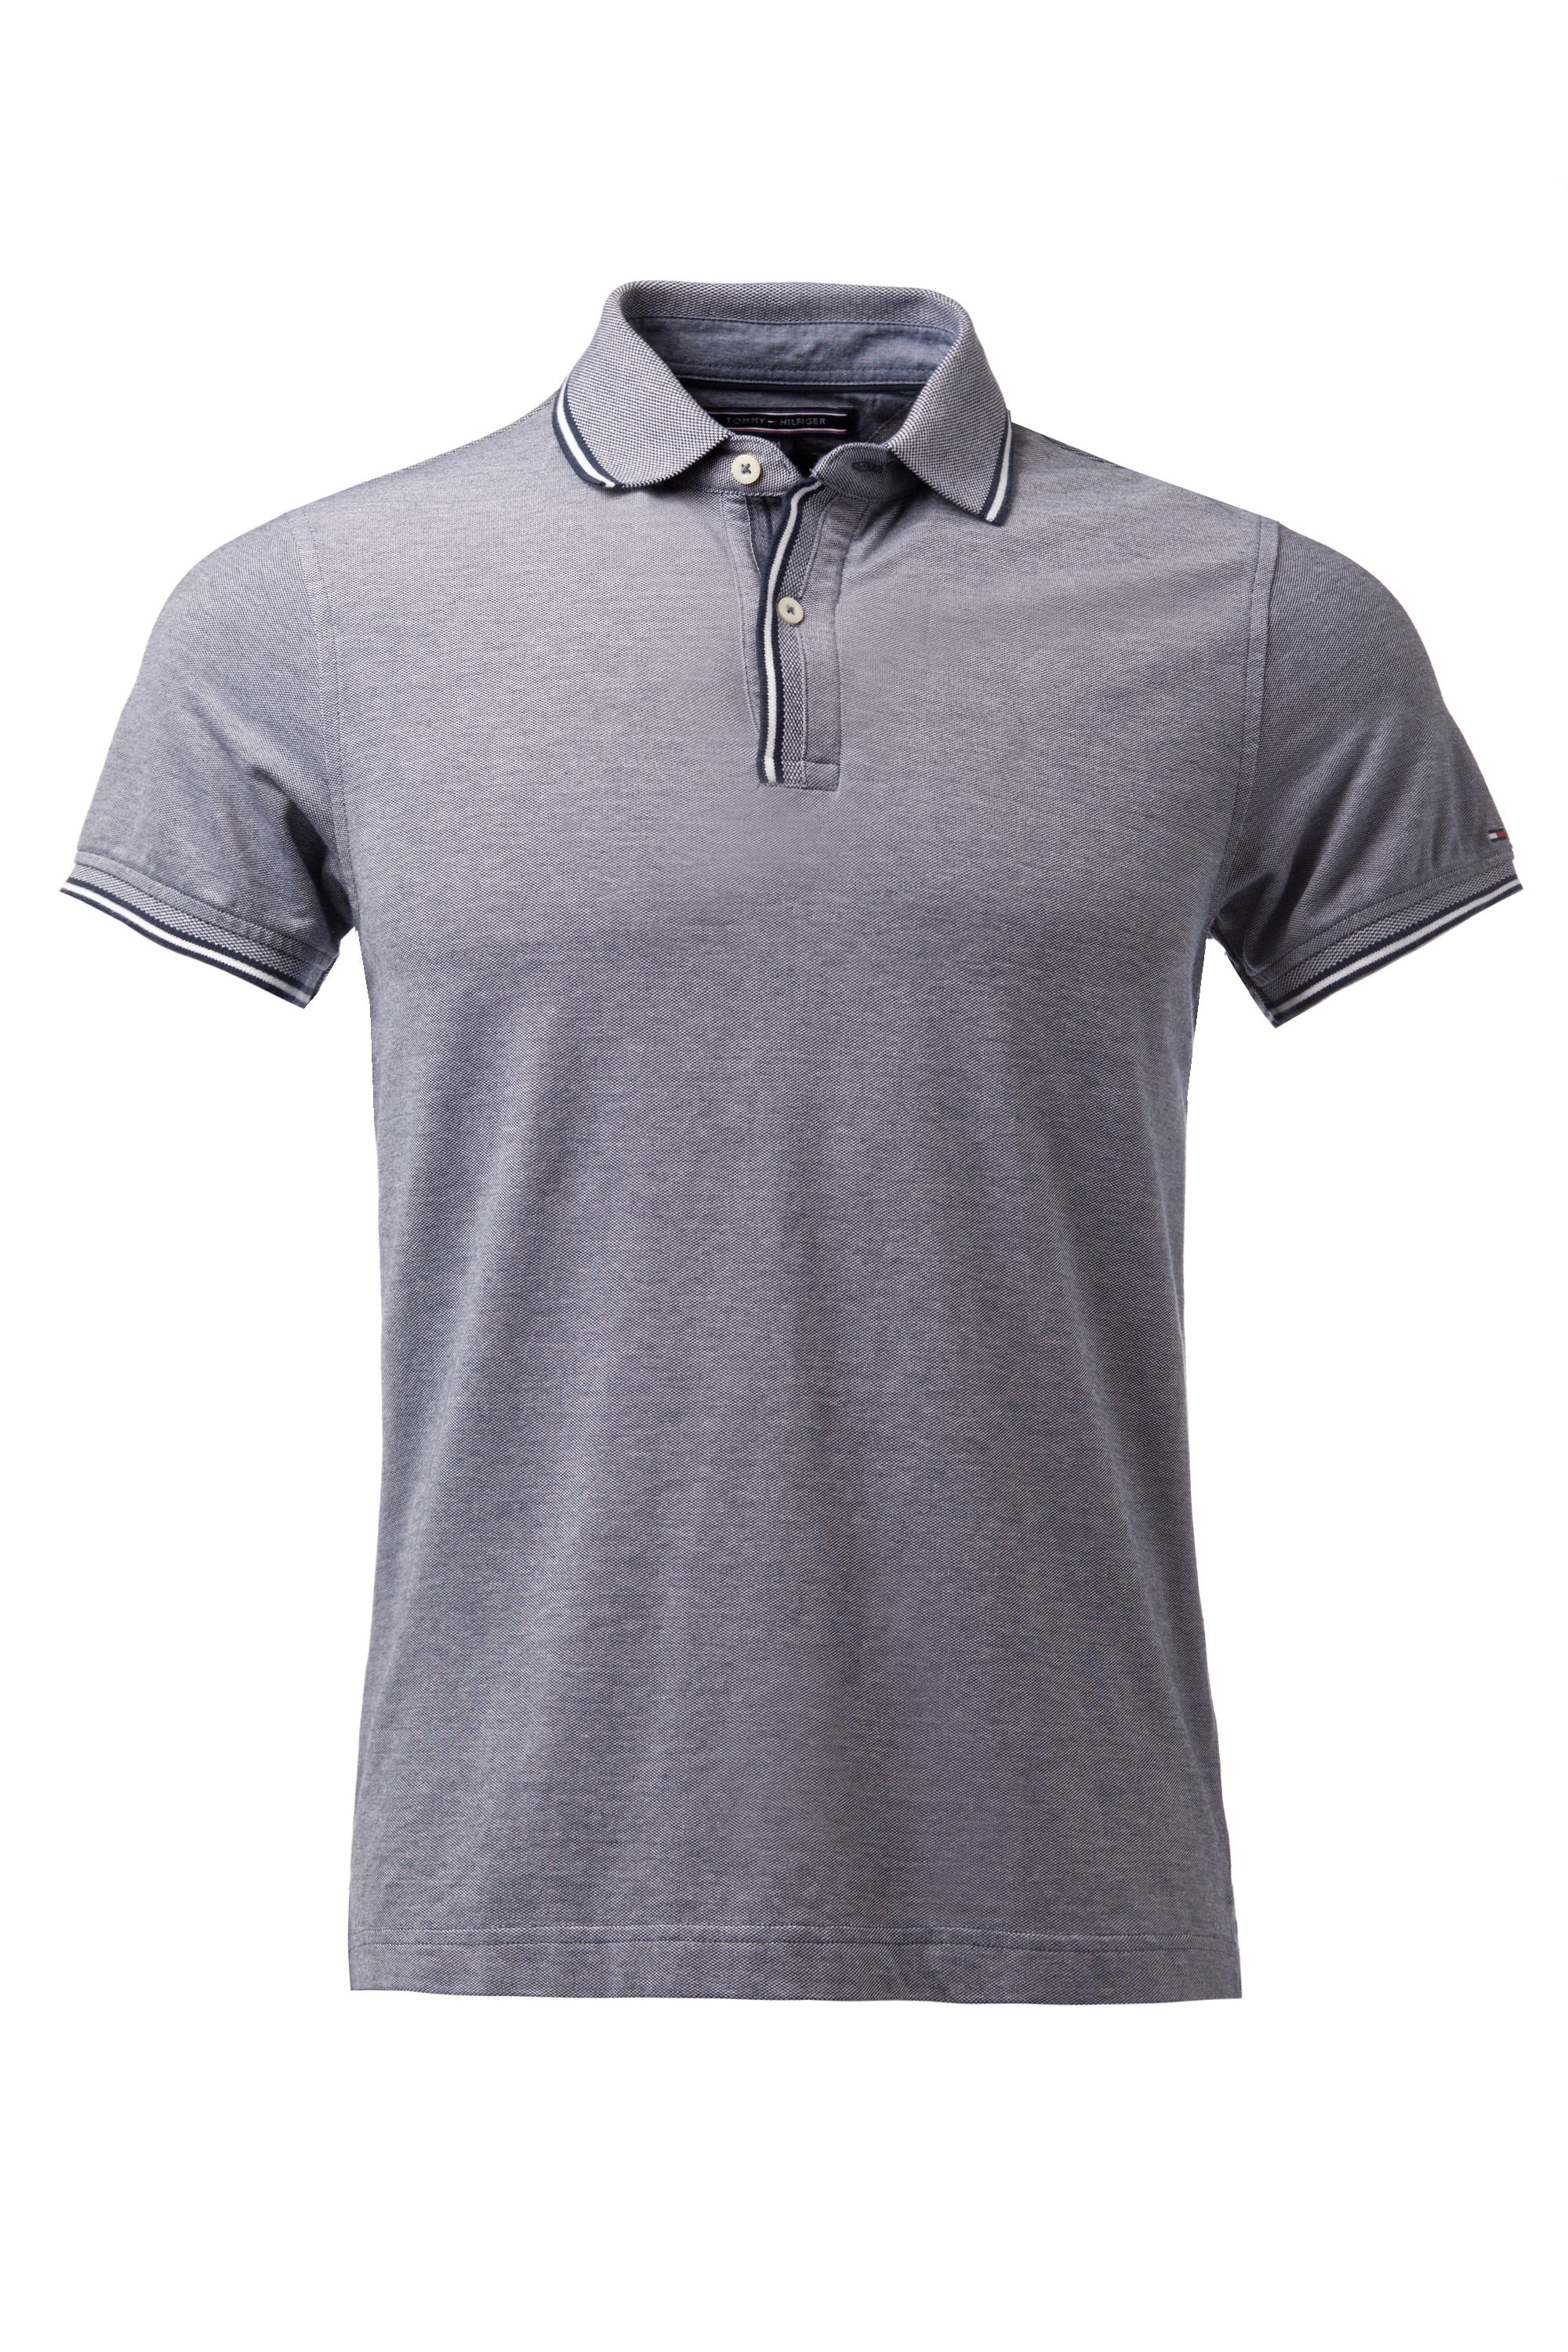 Tommy hilfiger Bram Plain Slim Fit Polo Shirt in Blue for Men | Lyst ...